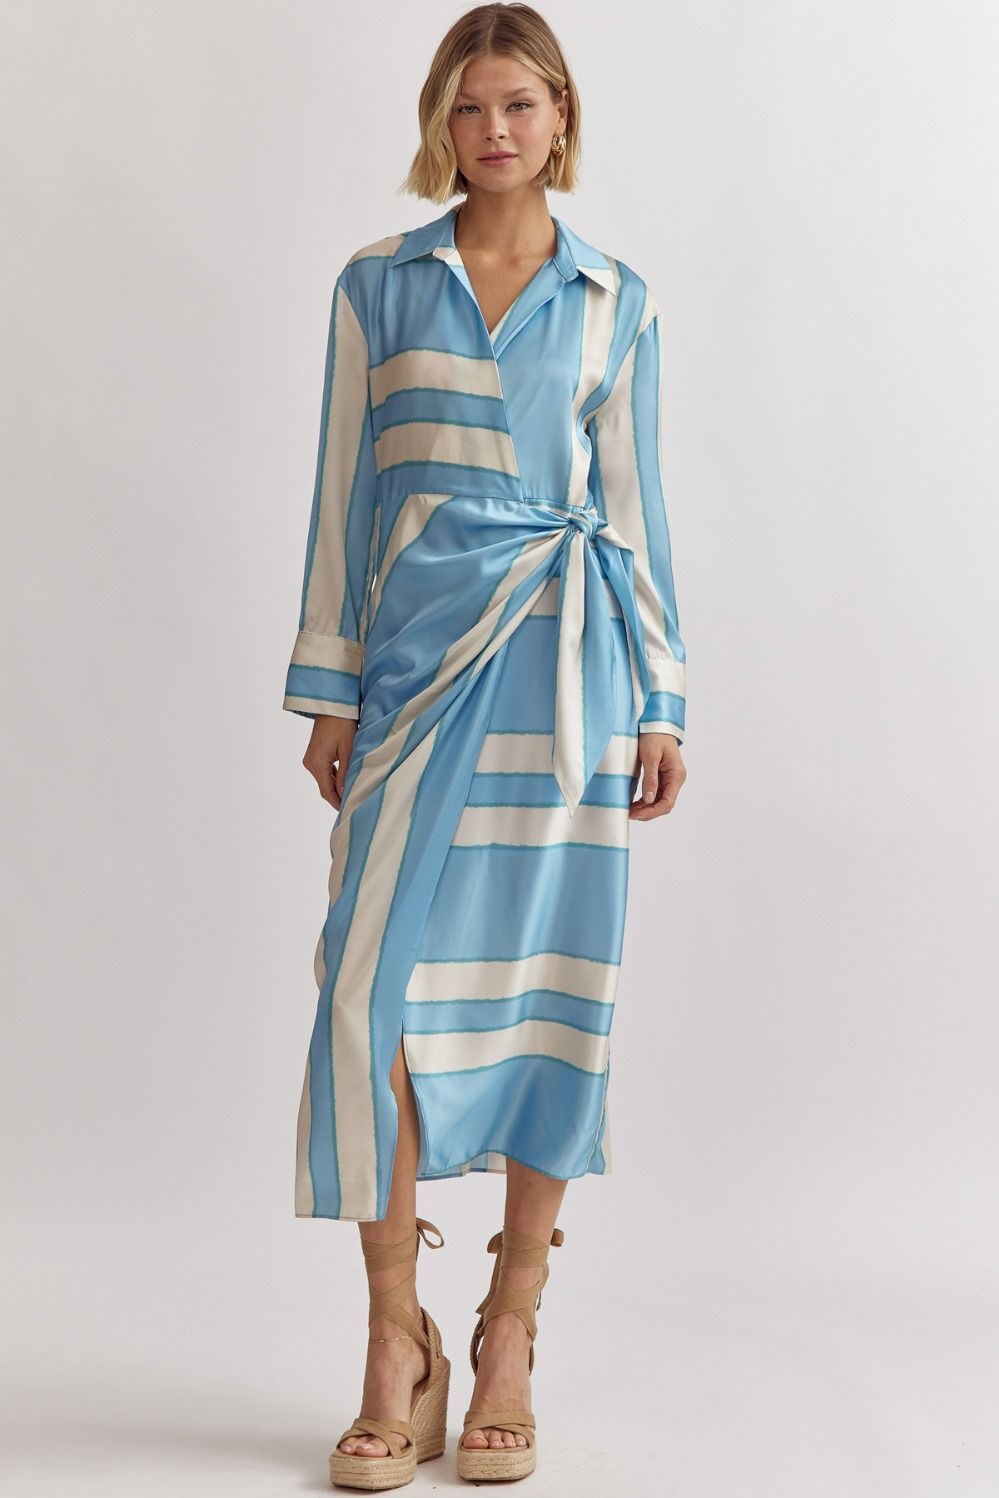 Blue Stripe Colorblock Maxi Dress